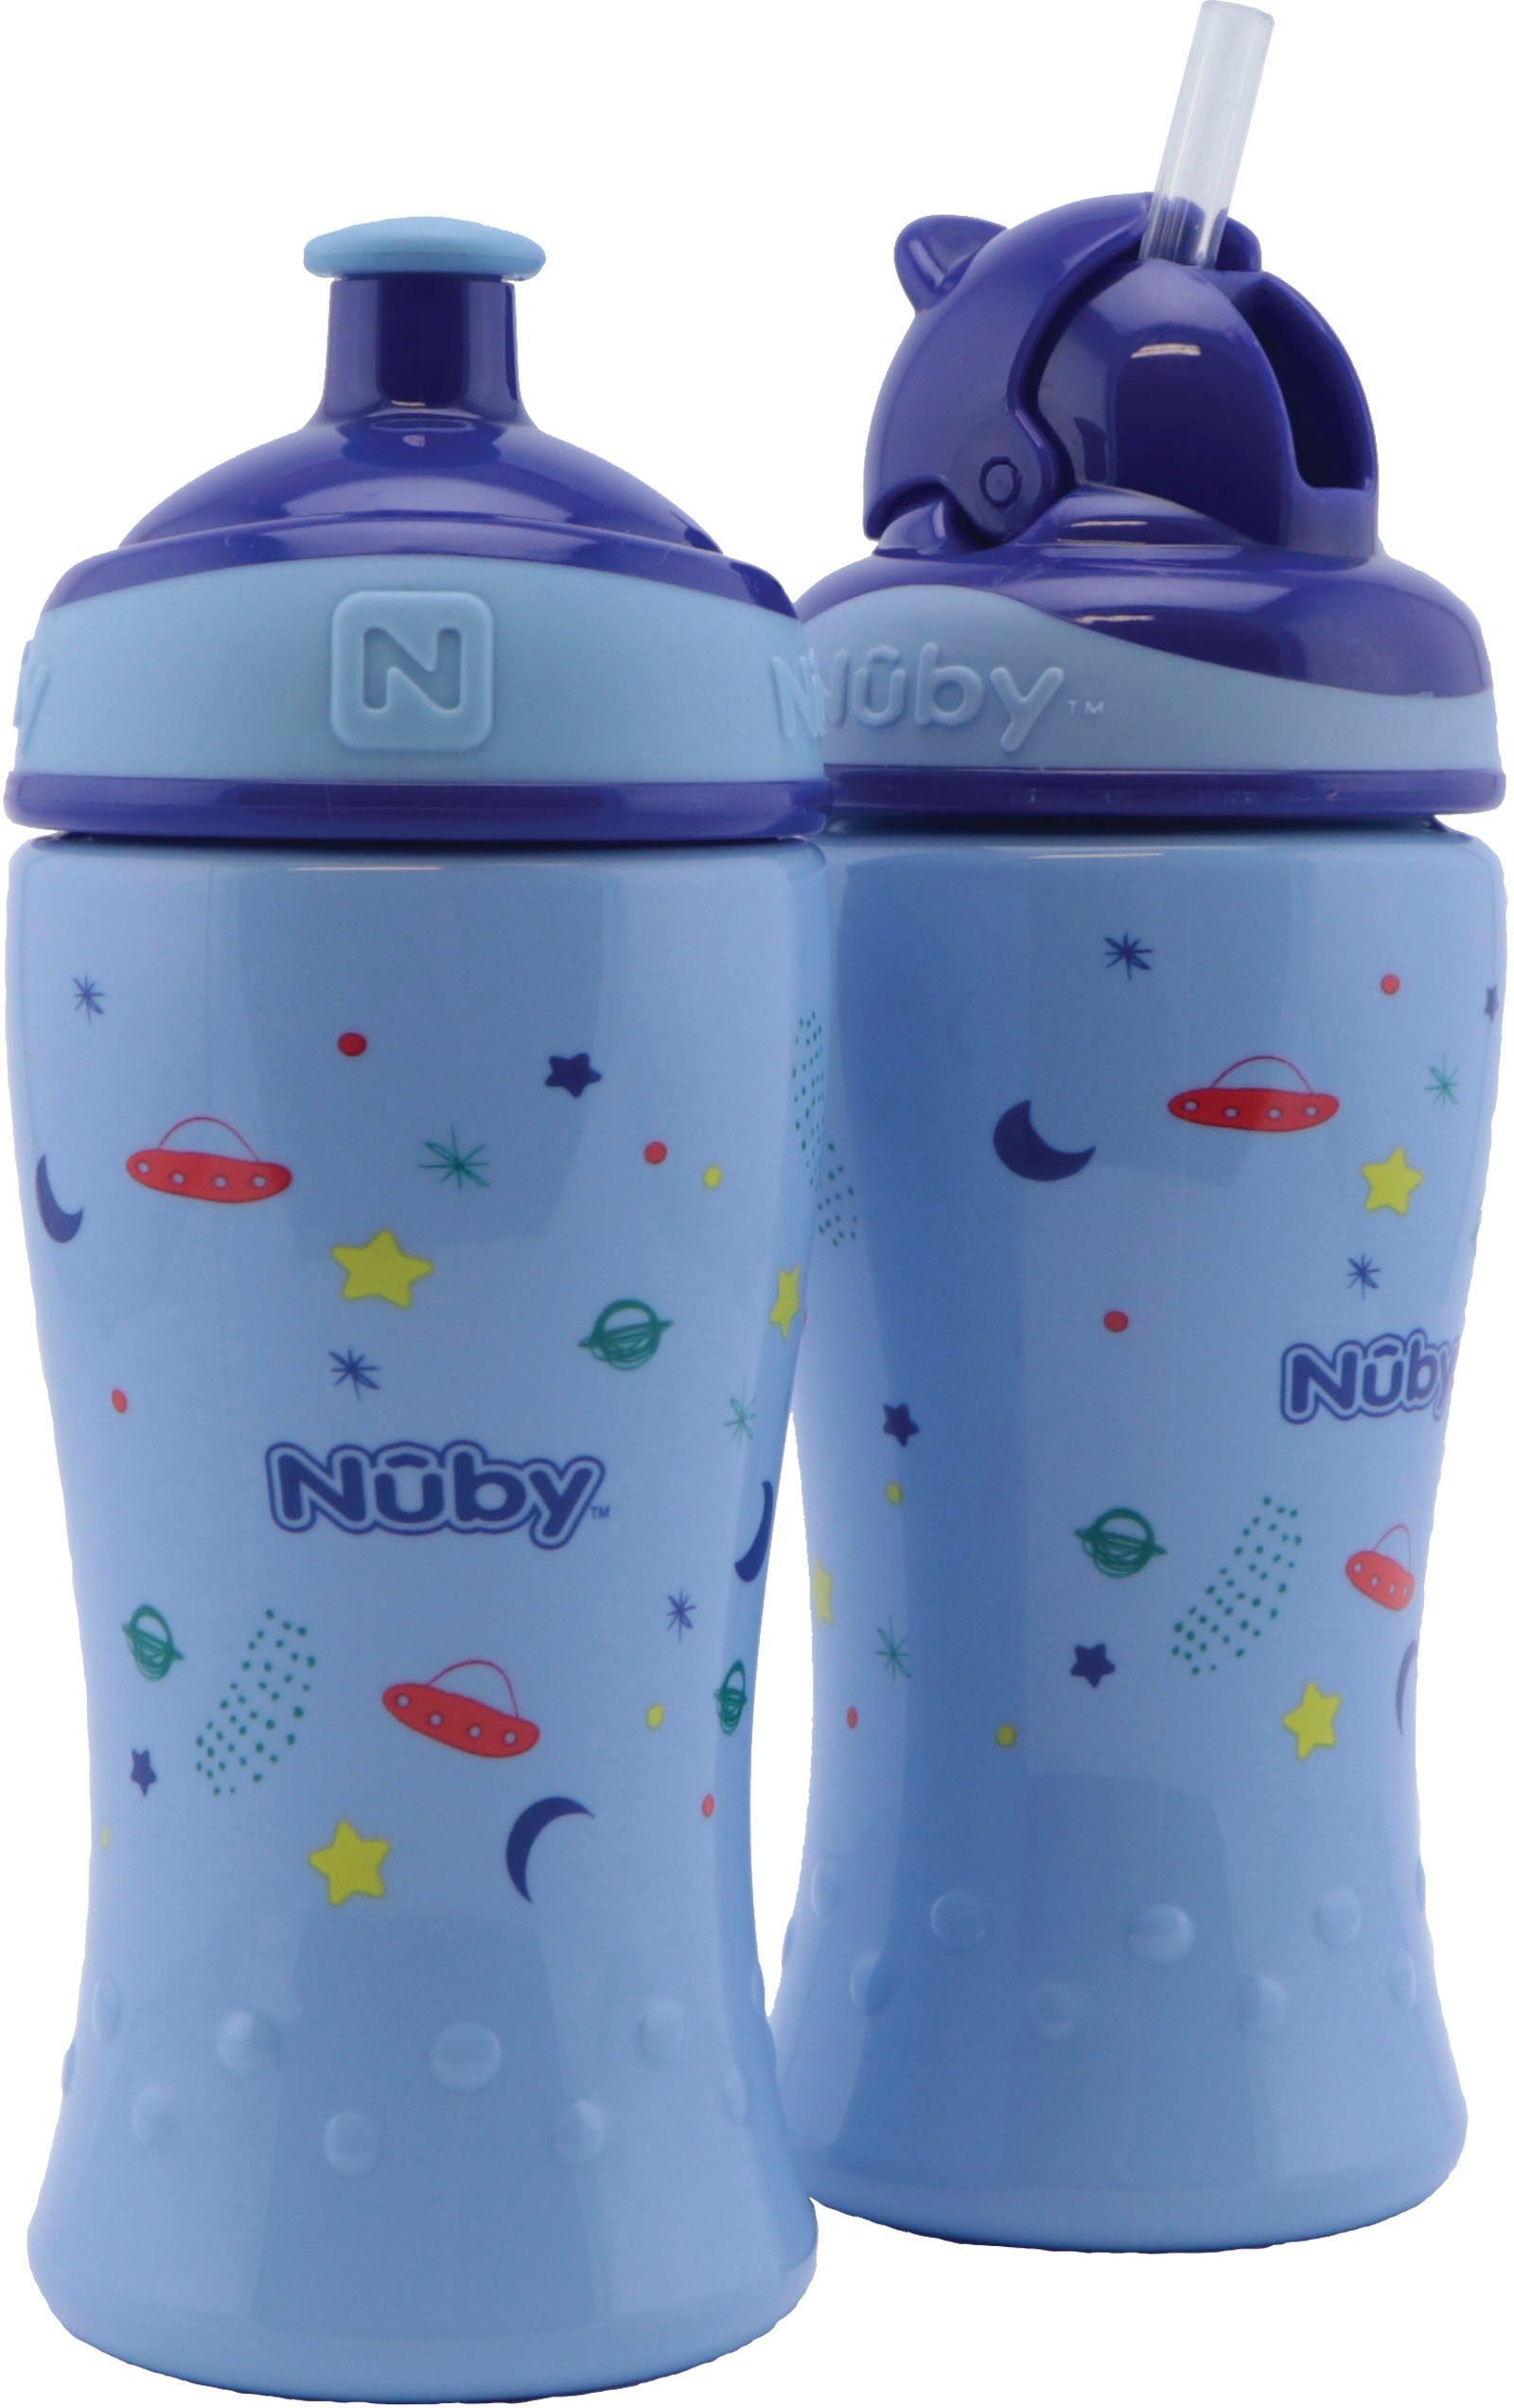 Nuby blau Trinkflasche